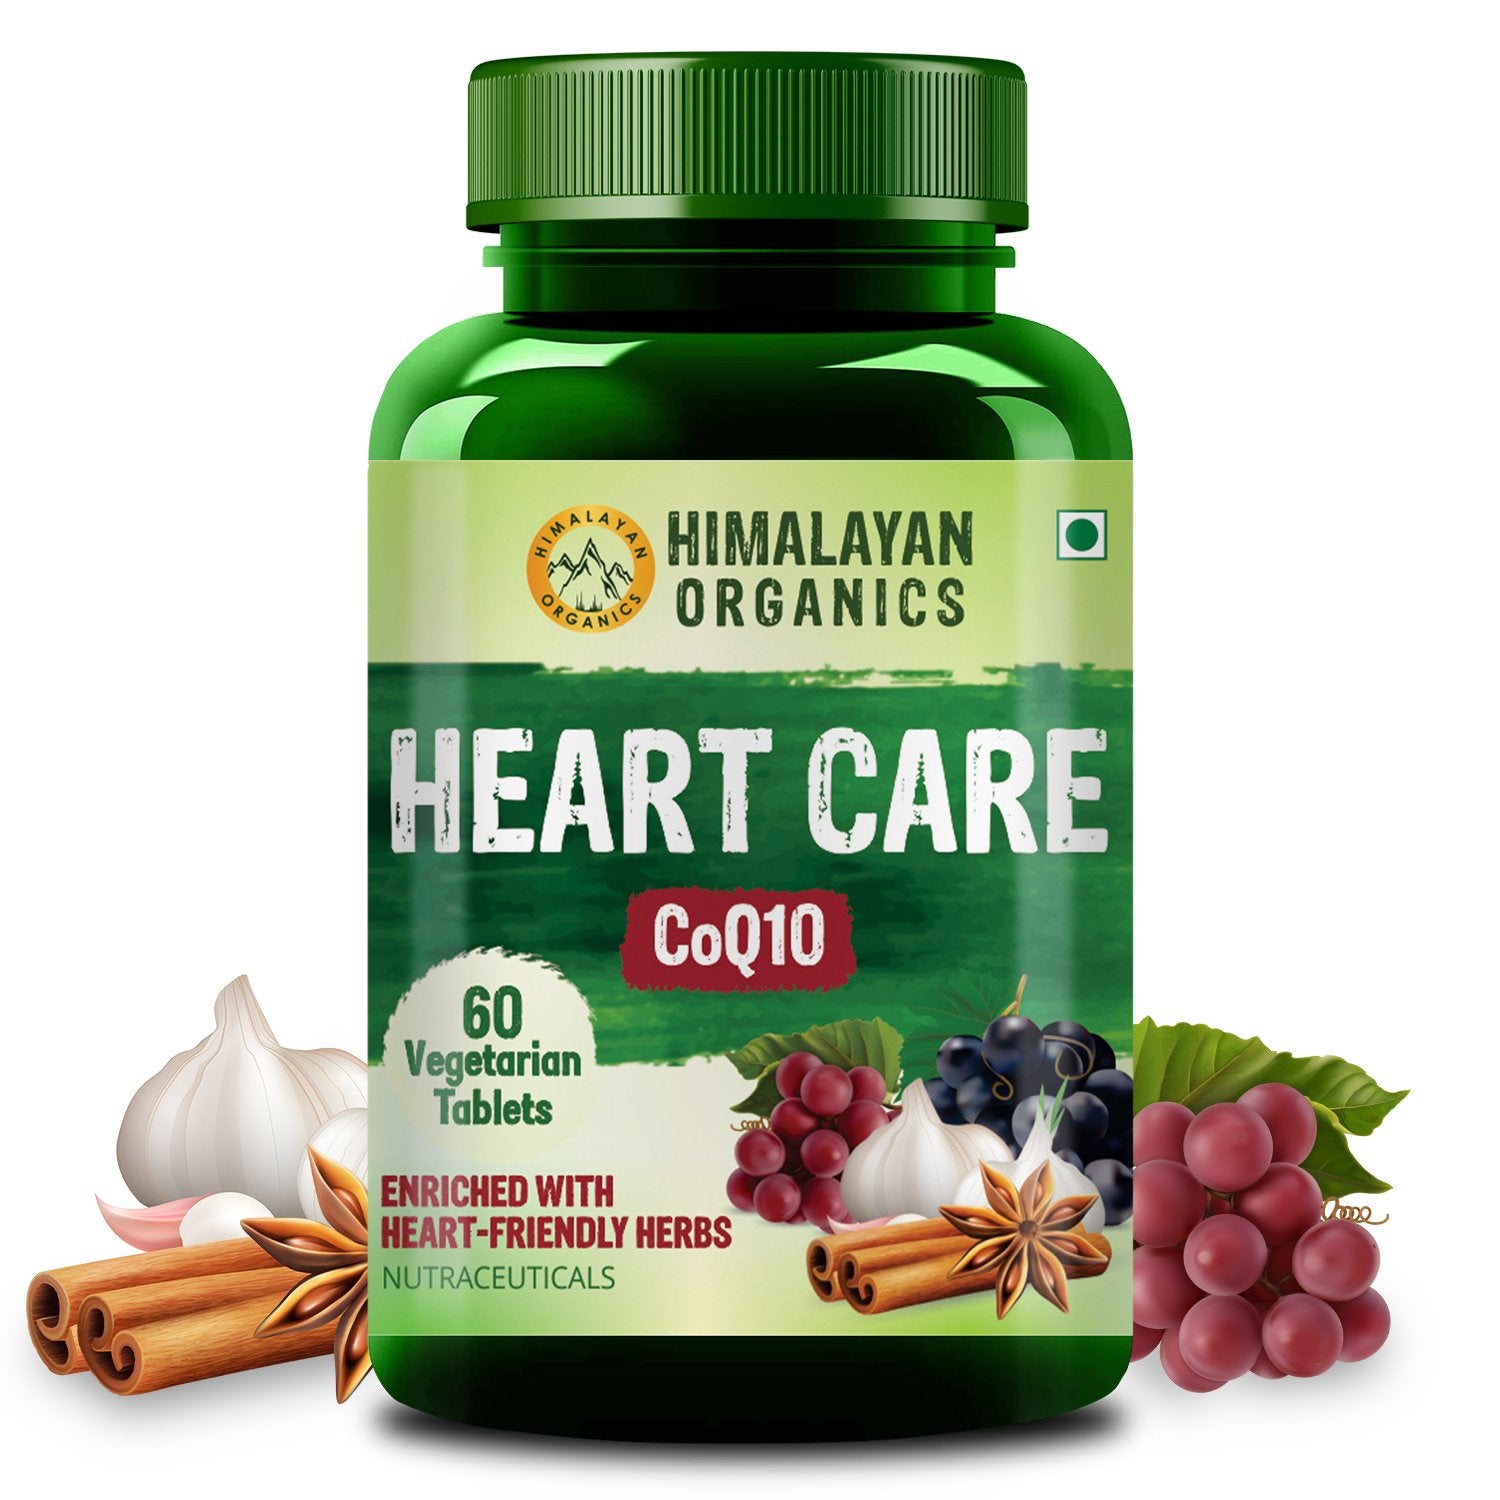 Himalayan Organics Heart Care with Hearth Friendly Herbs